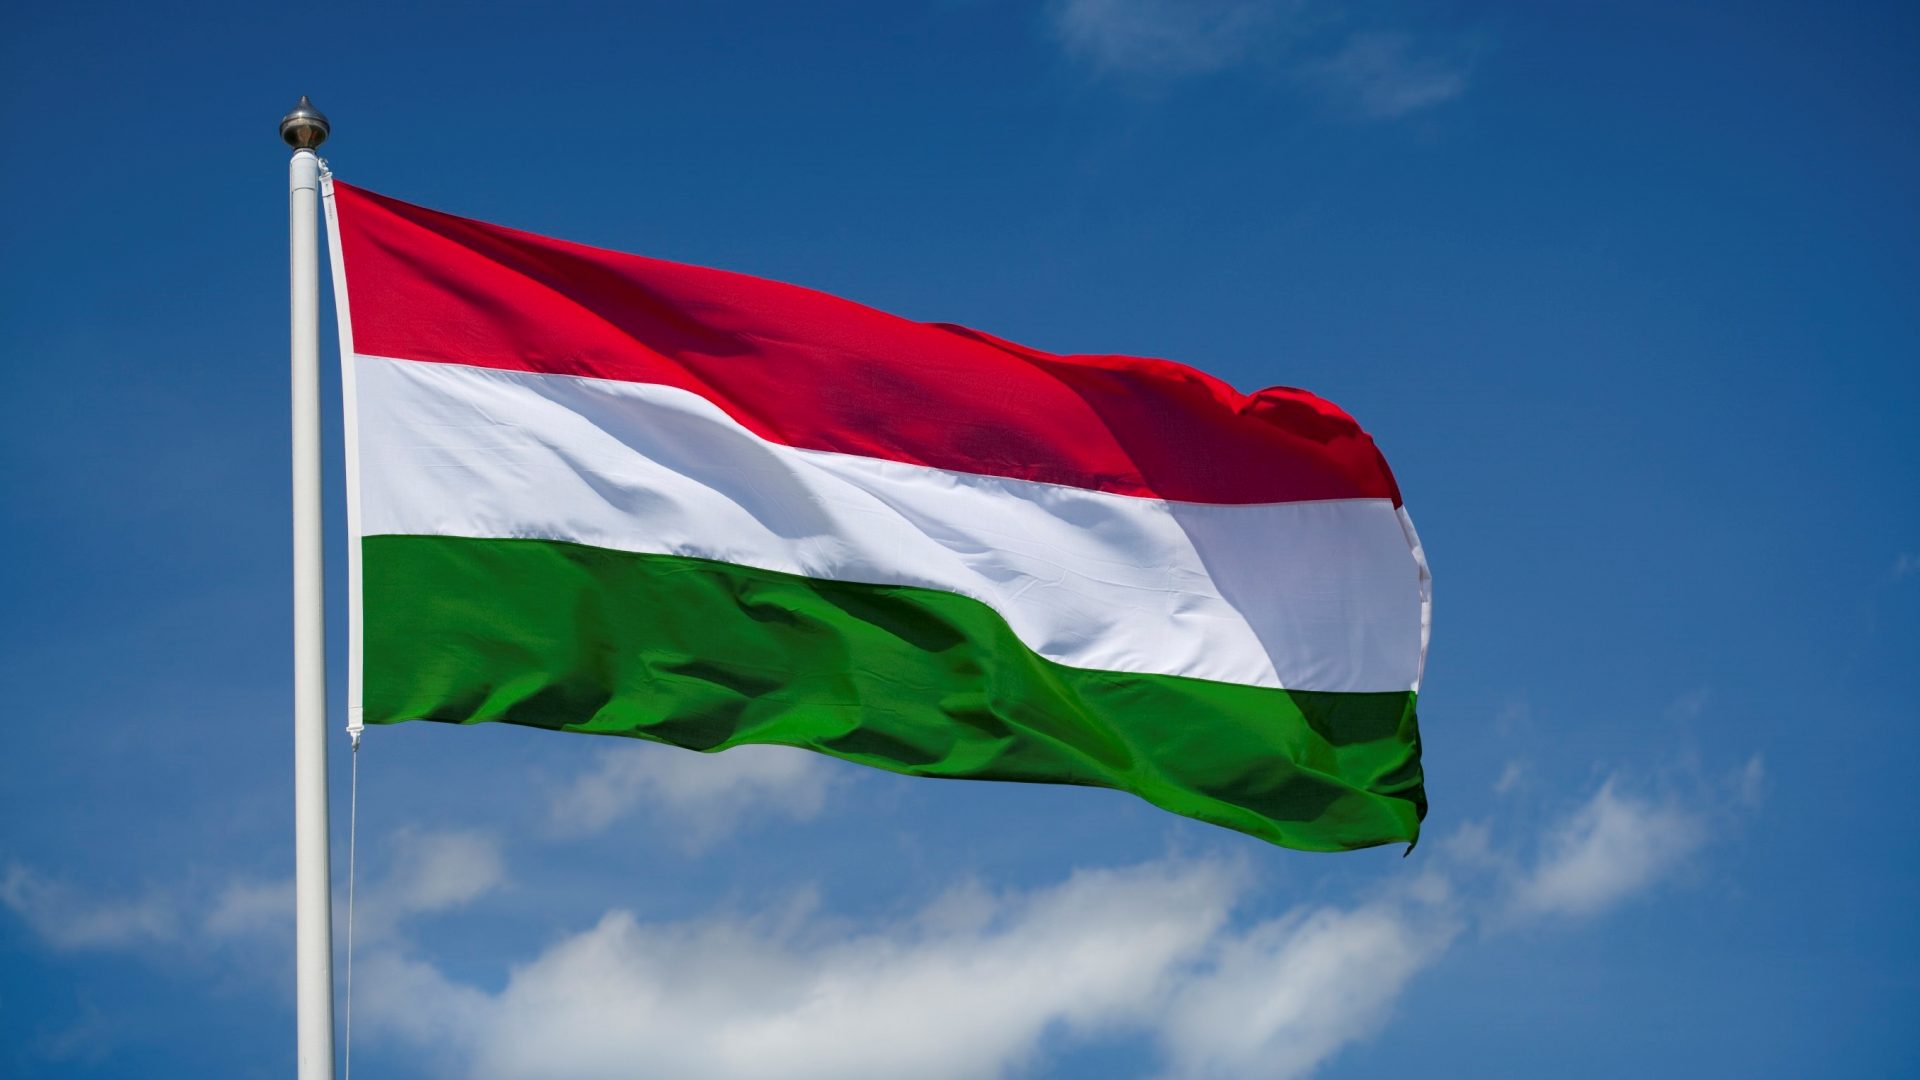 FOCUS ON HUNGARY